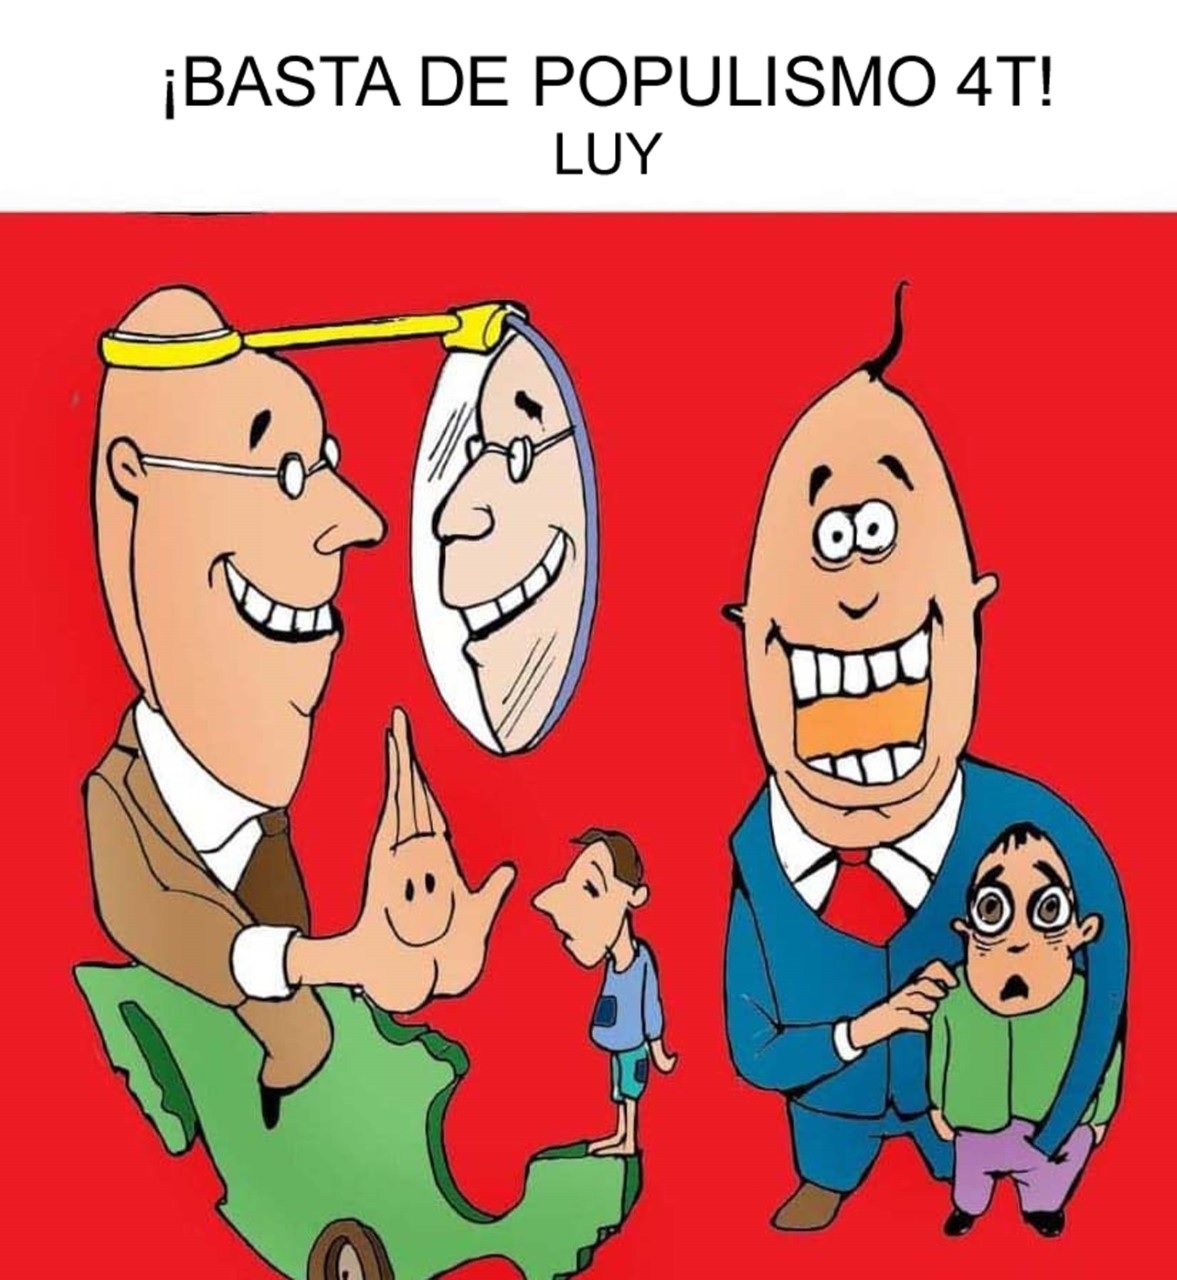 ¡BASTA DE POPULISMO 4T! -LUY